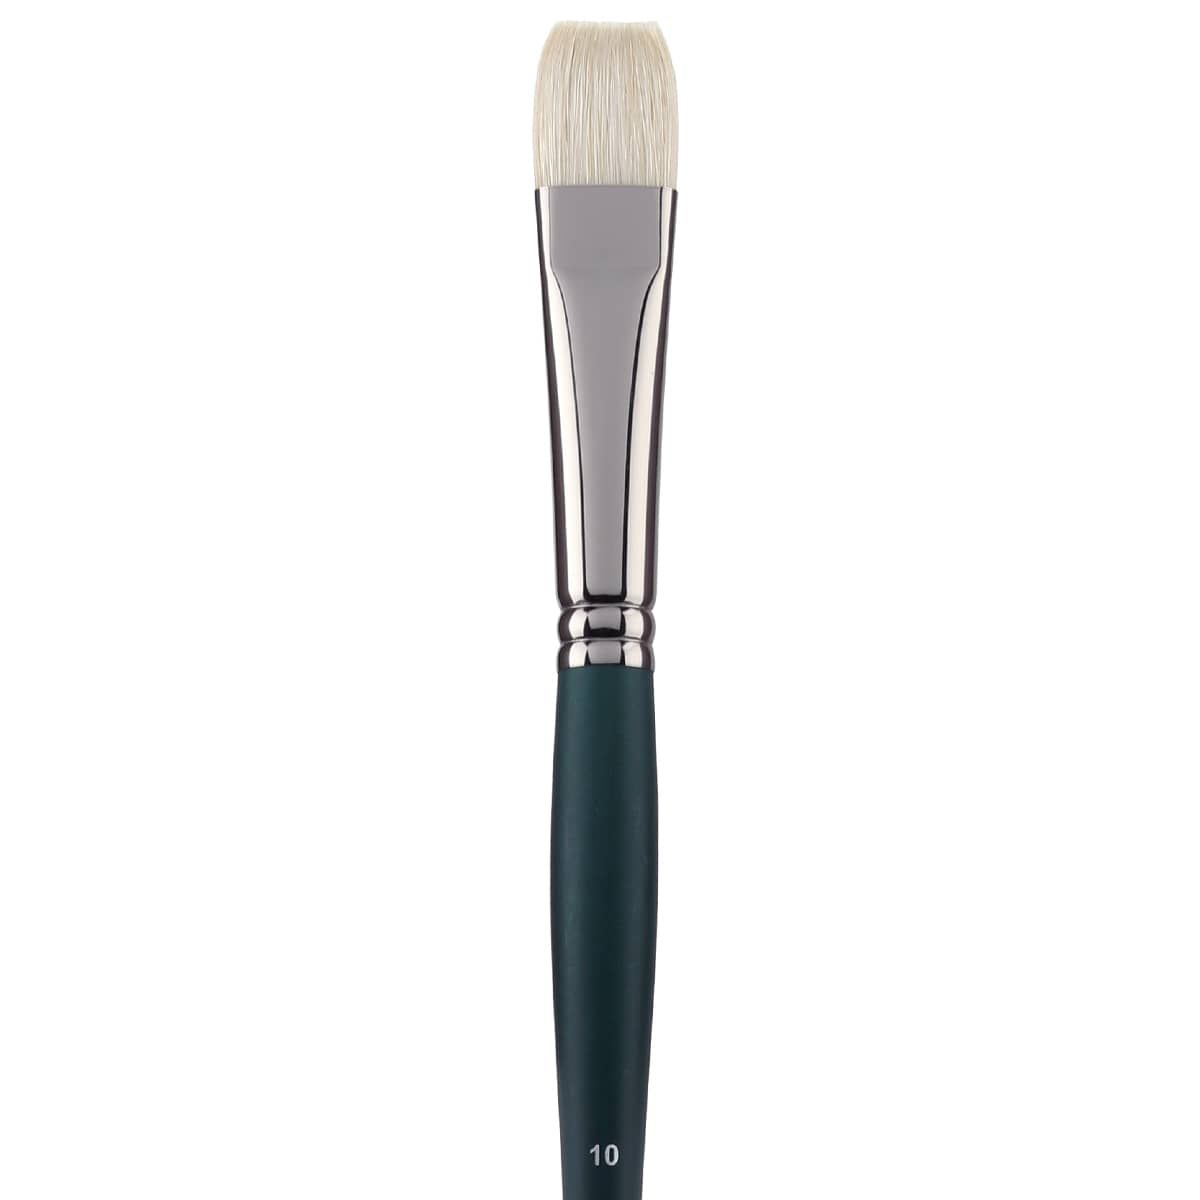 Imperial Professional Chungking Hog Bristle Brush, Bright Size #10